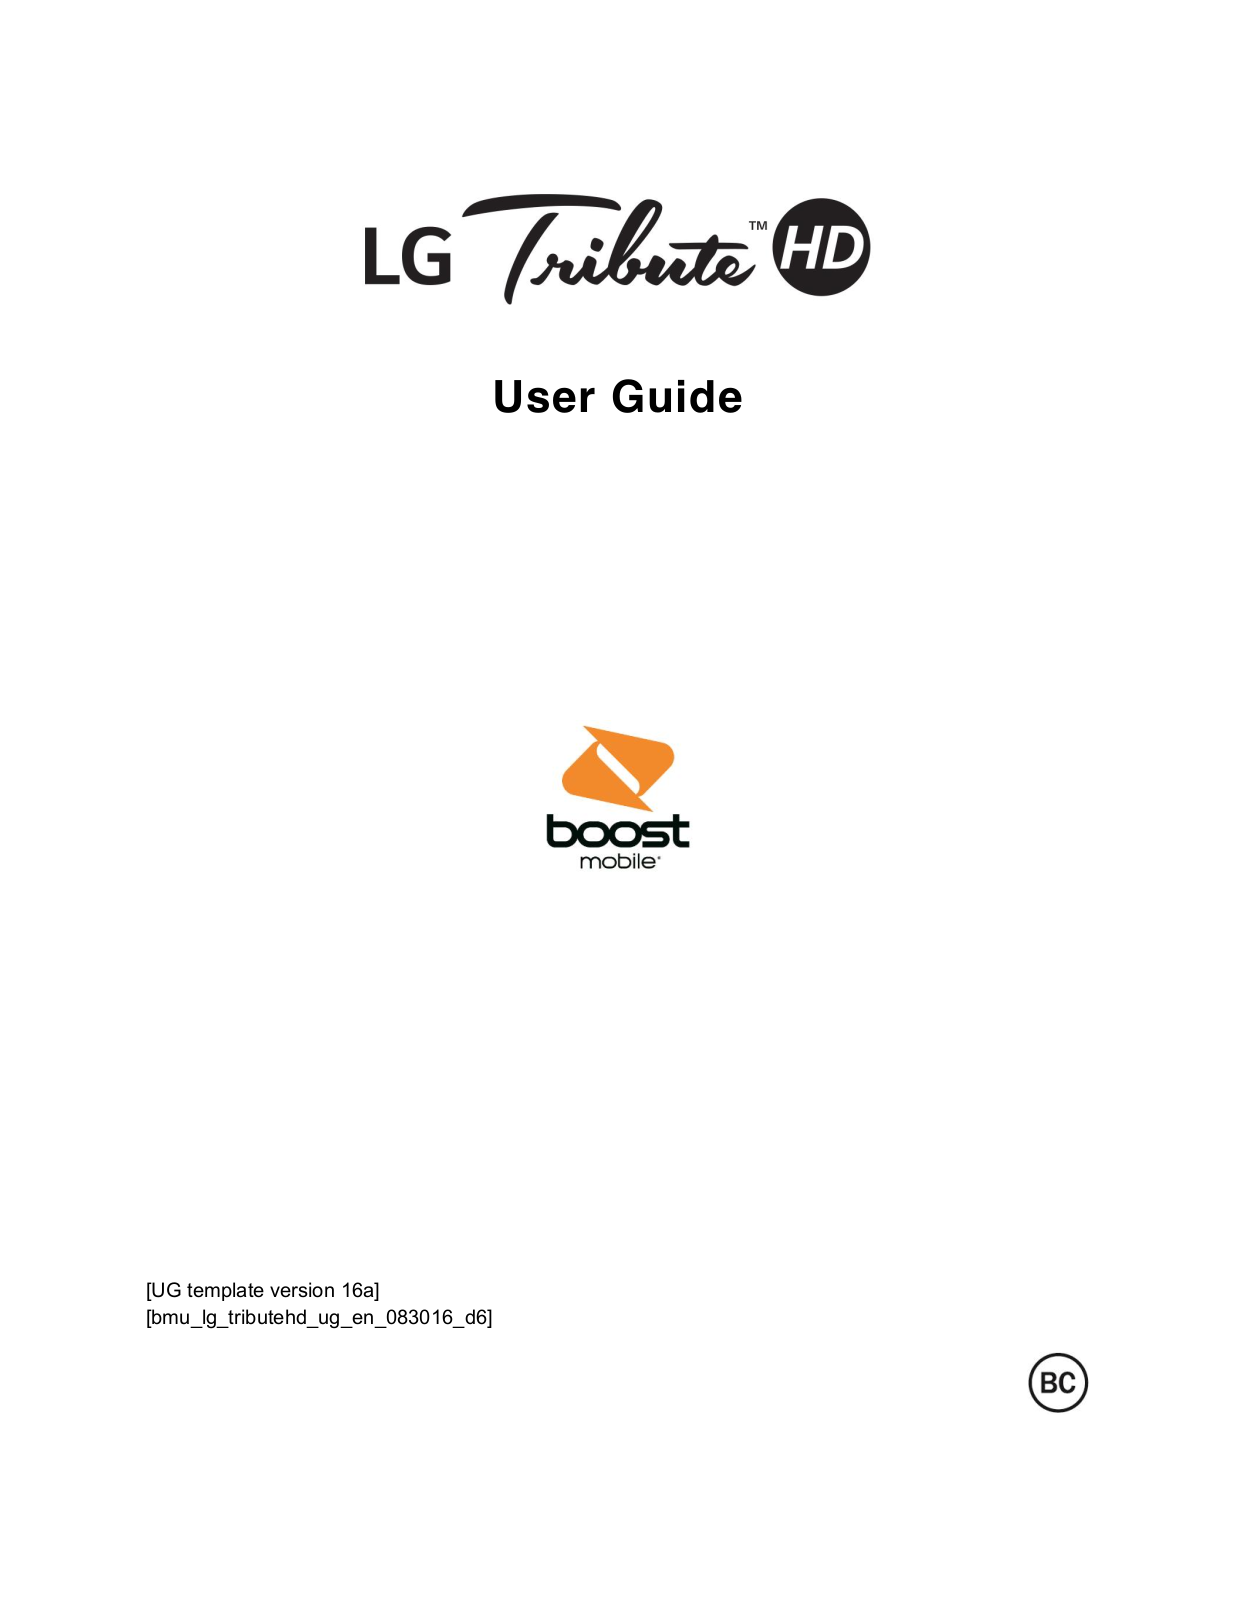 LG LS676 User Guide